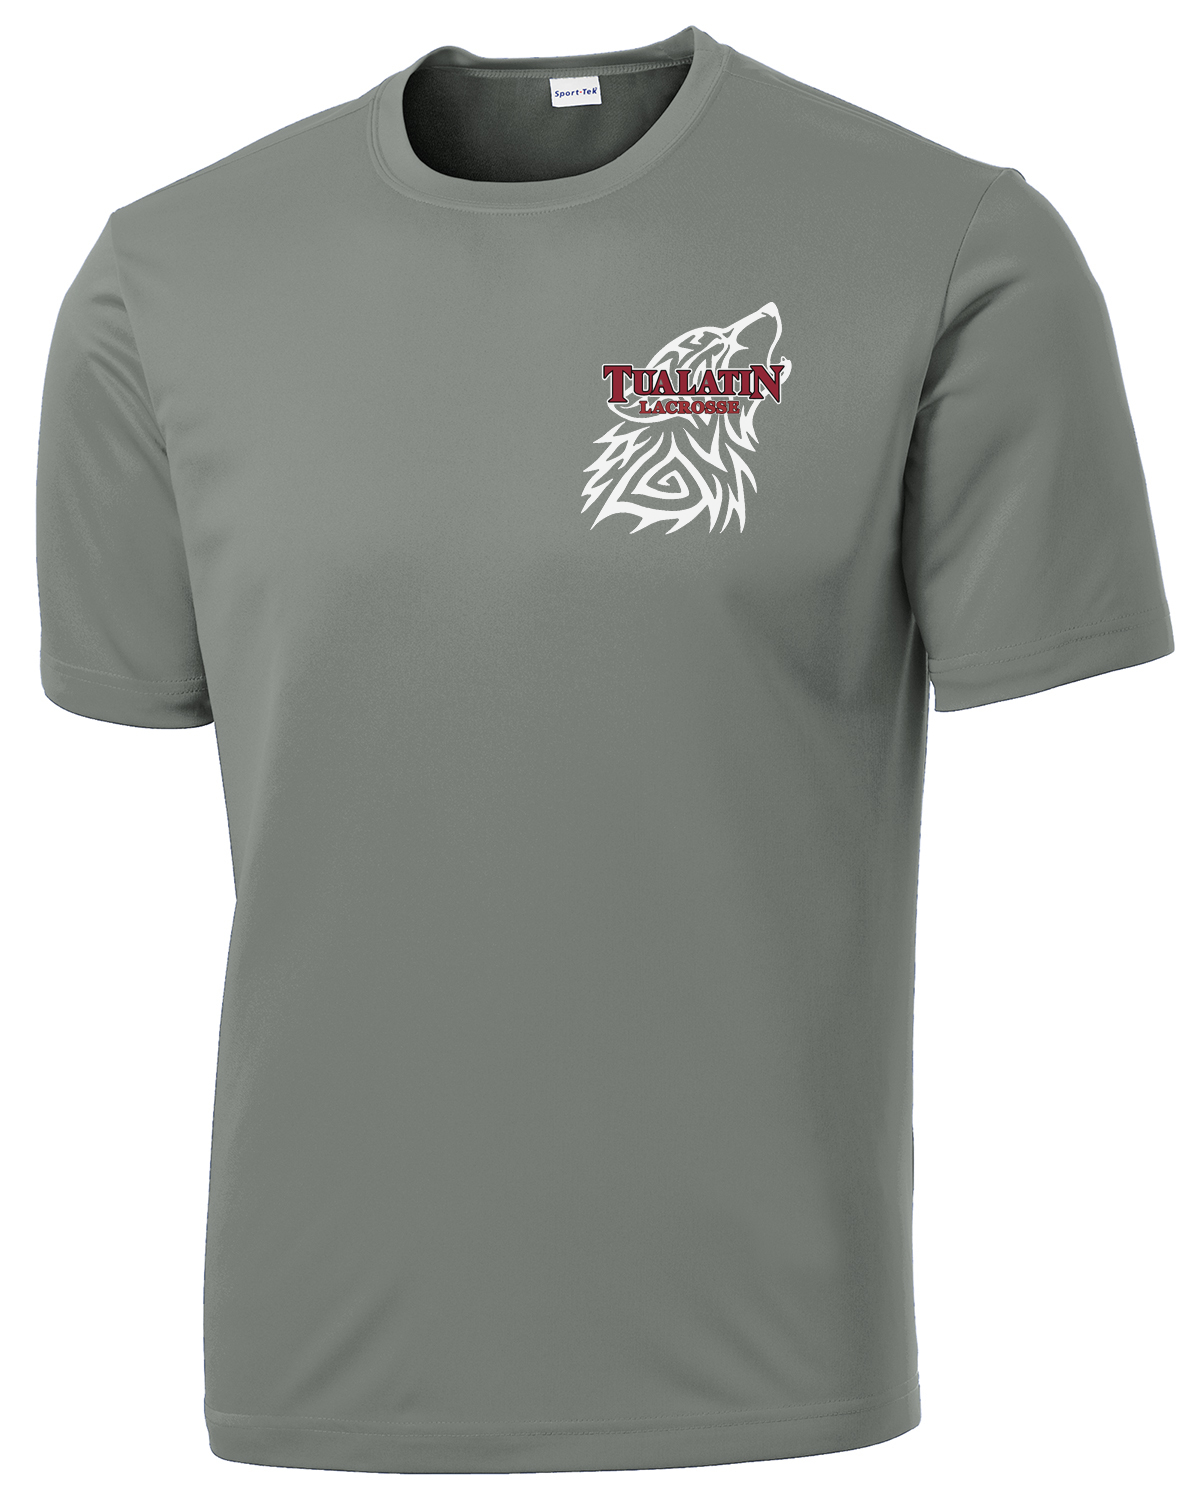 Tualatin Grey Performance T-Shirt